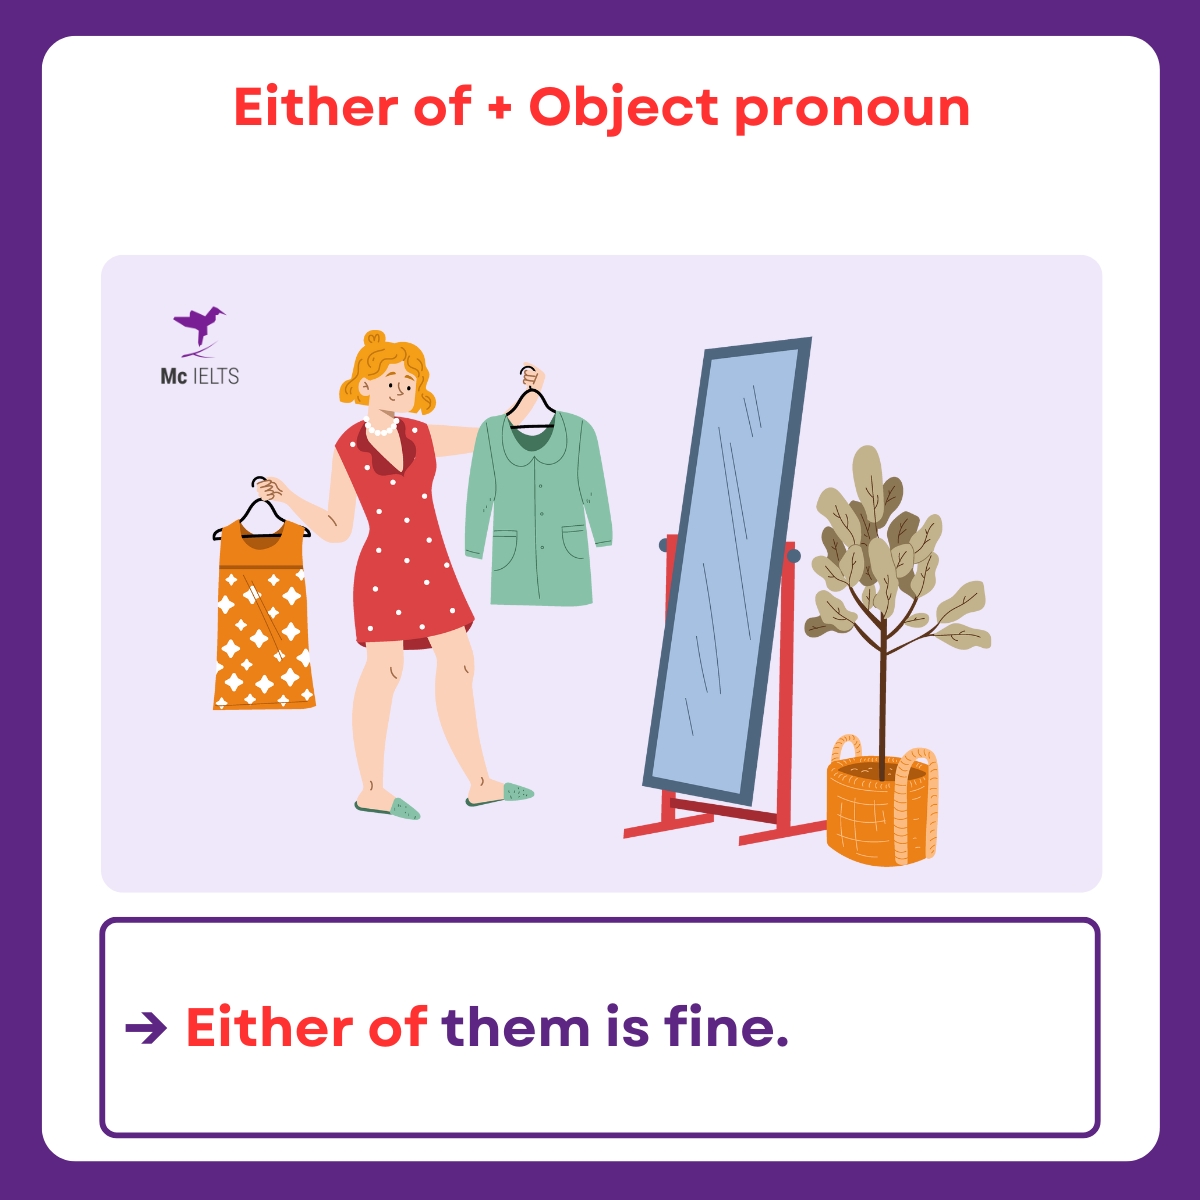 Ví dụ cấu trúc either neither: Either of + Object pronoun